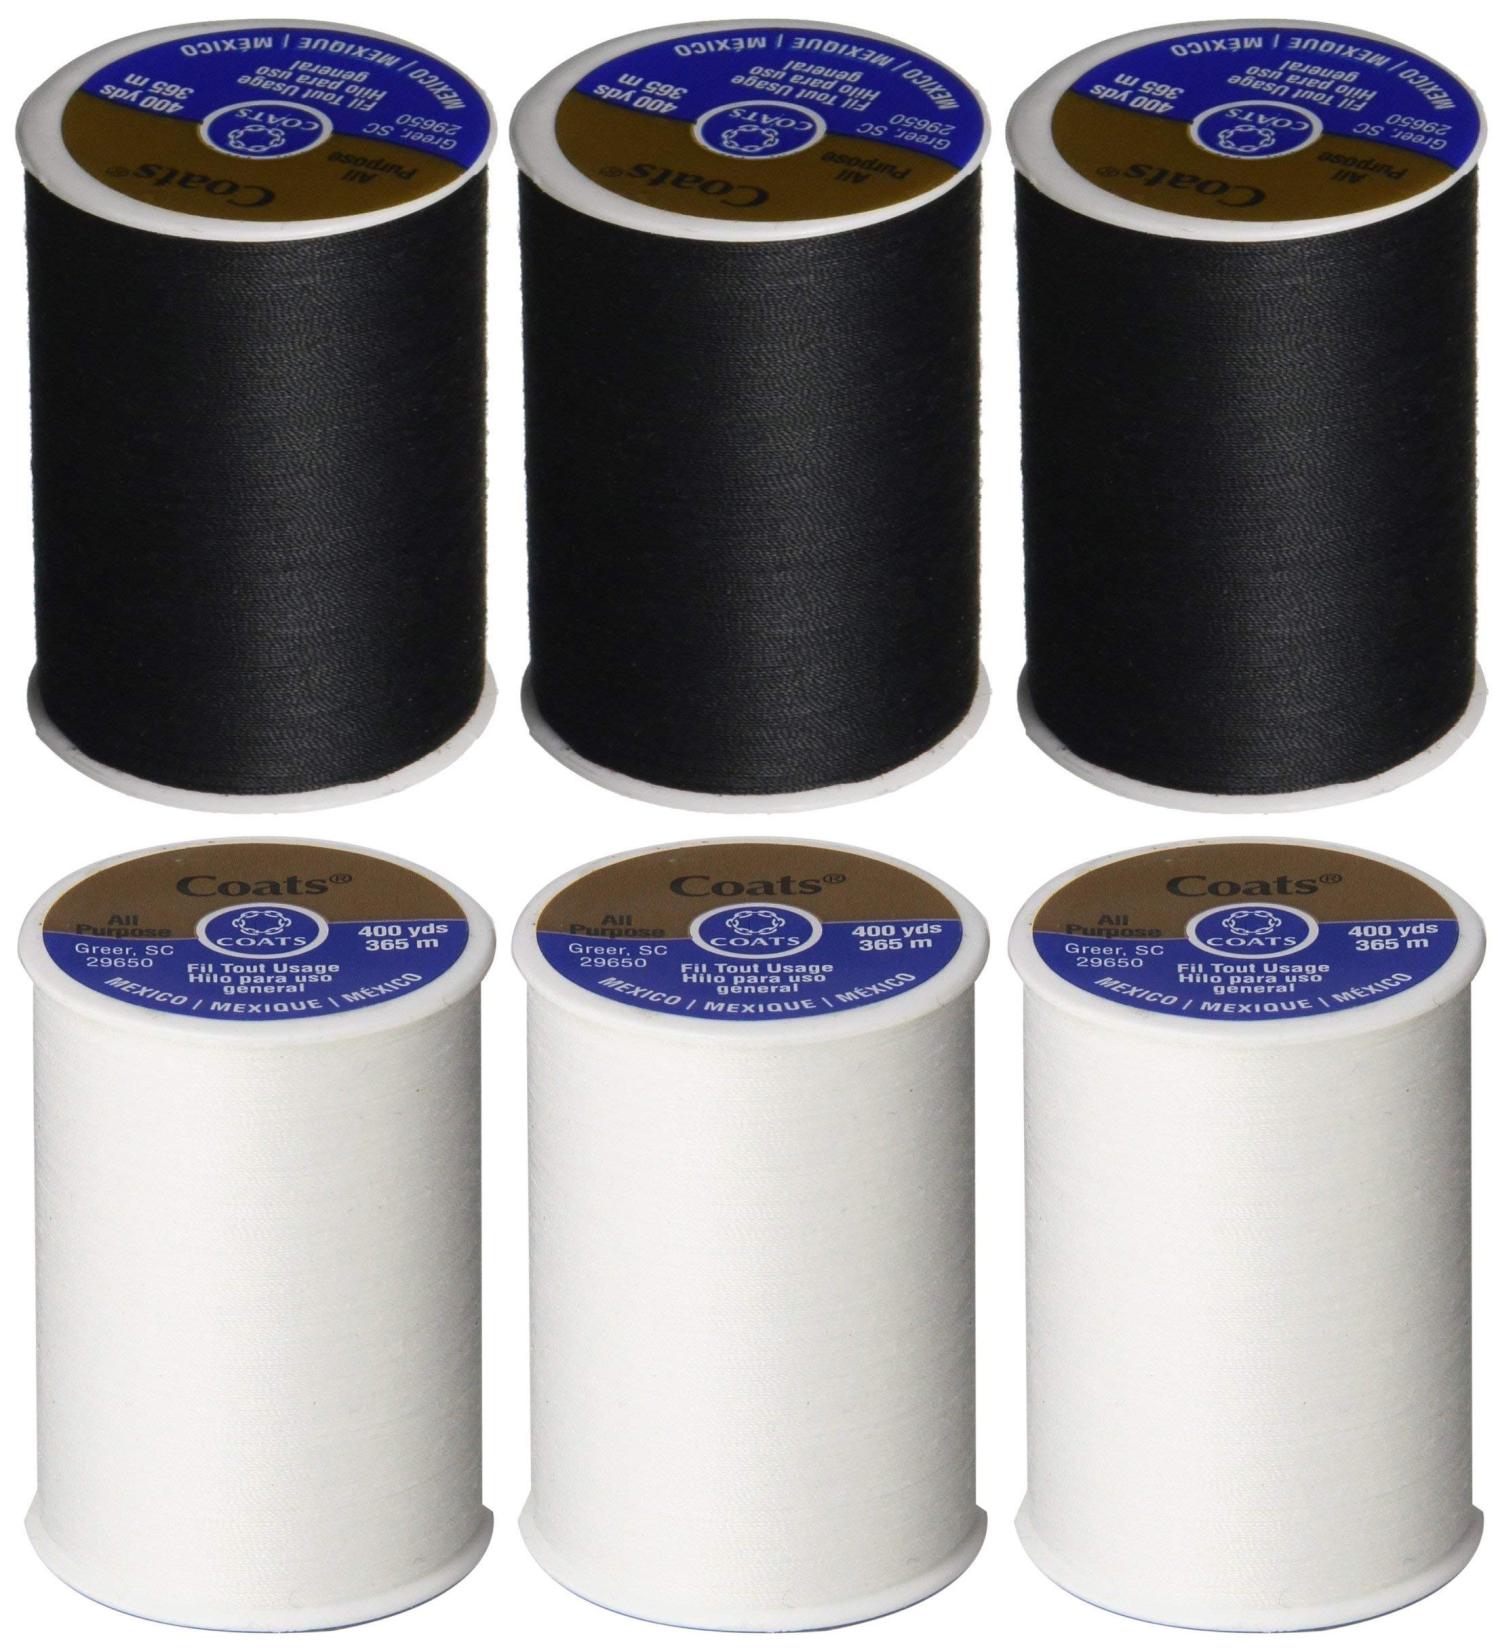 6 Pack Bundle - (3 Black + 3 White) - Coats & Clark Dual Duty All-Purpose  Thread - Three 400 Yard Spools each of BLACK & White Polyester